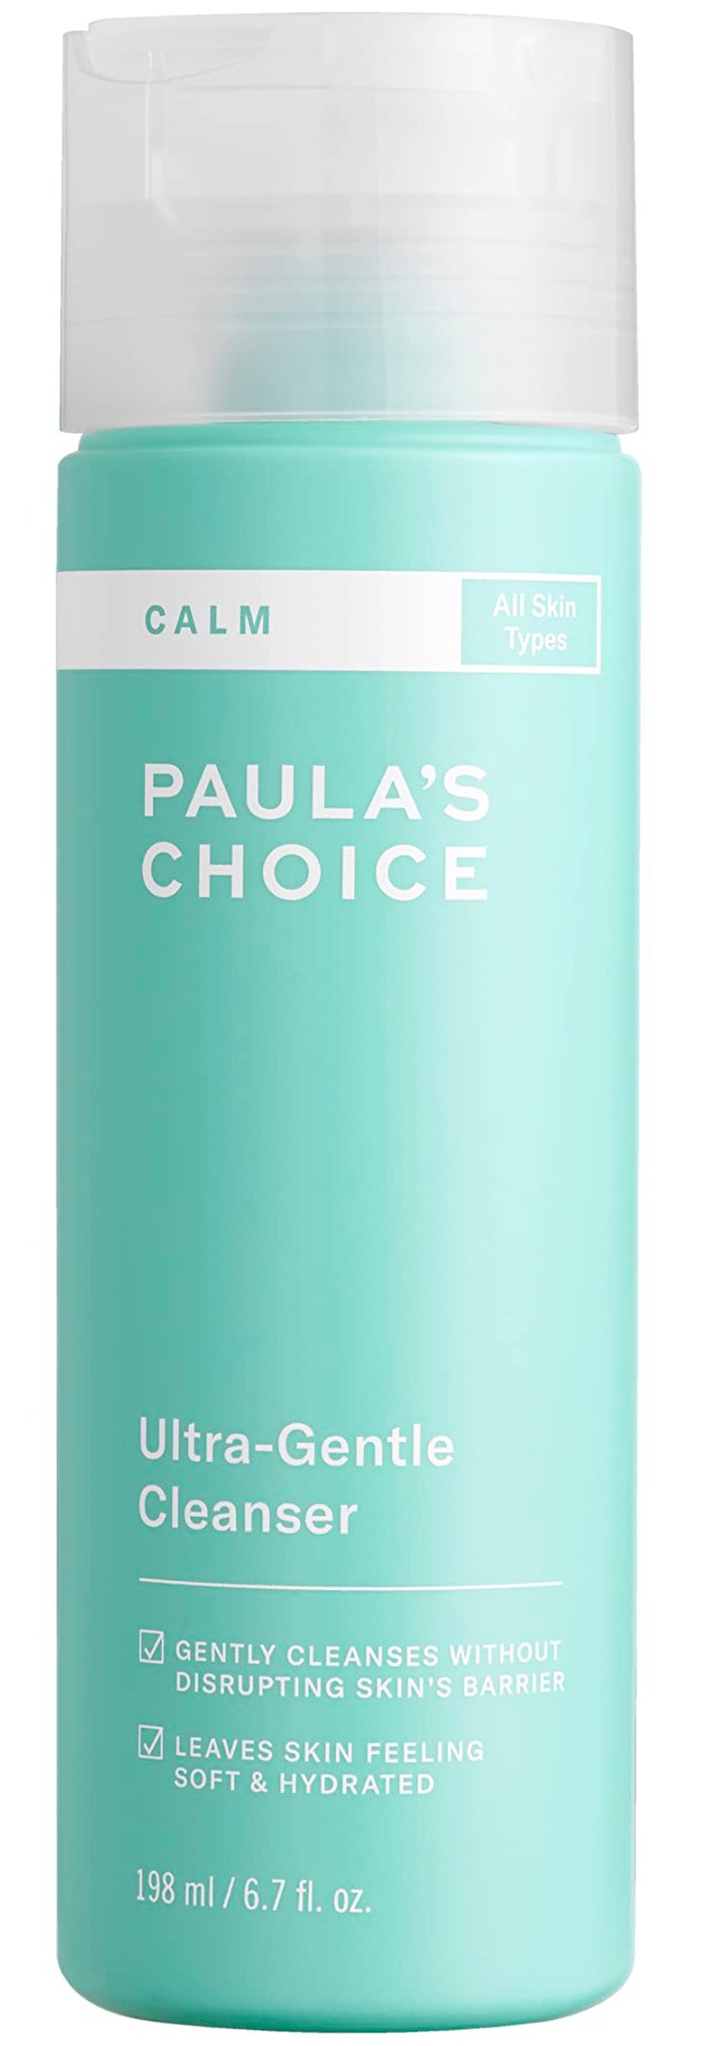 Paula's Choice Calm Ultra-gentle Cleanser